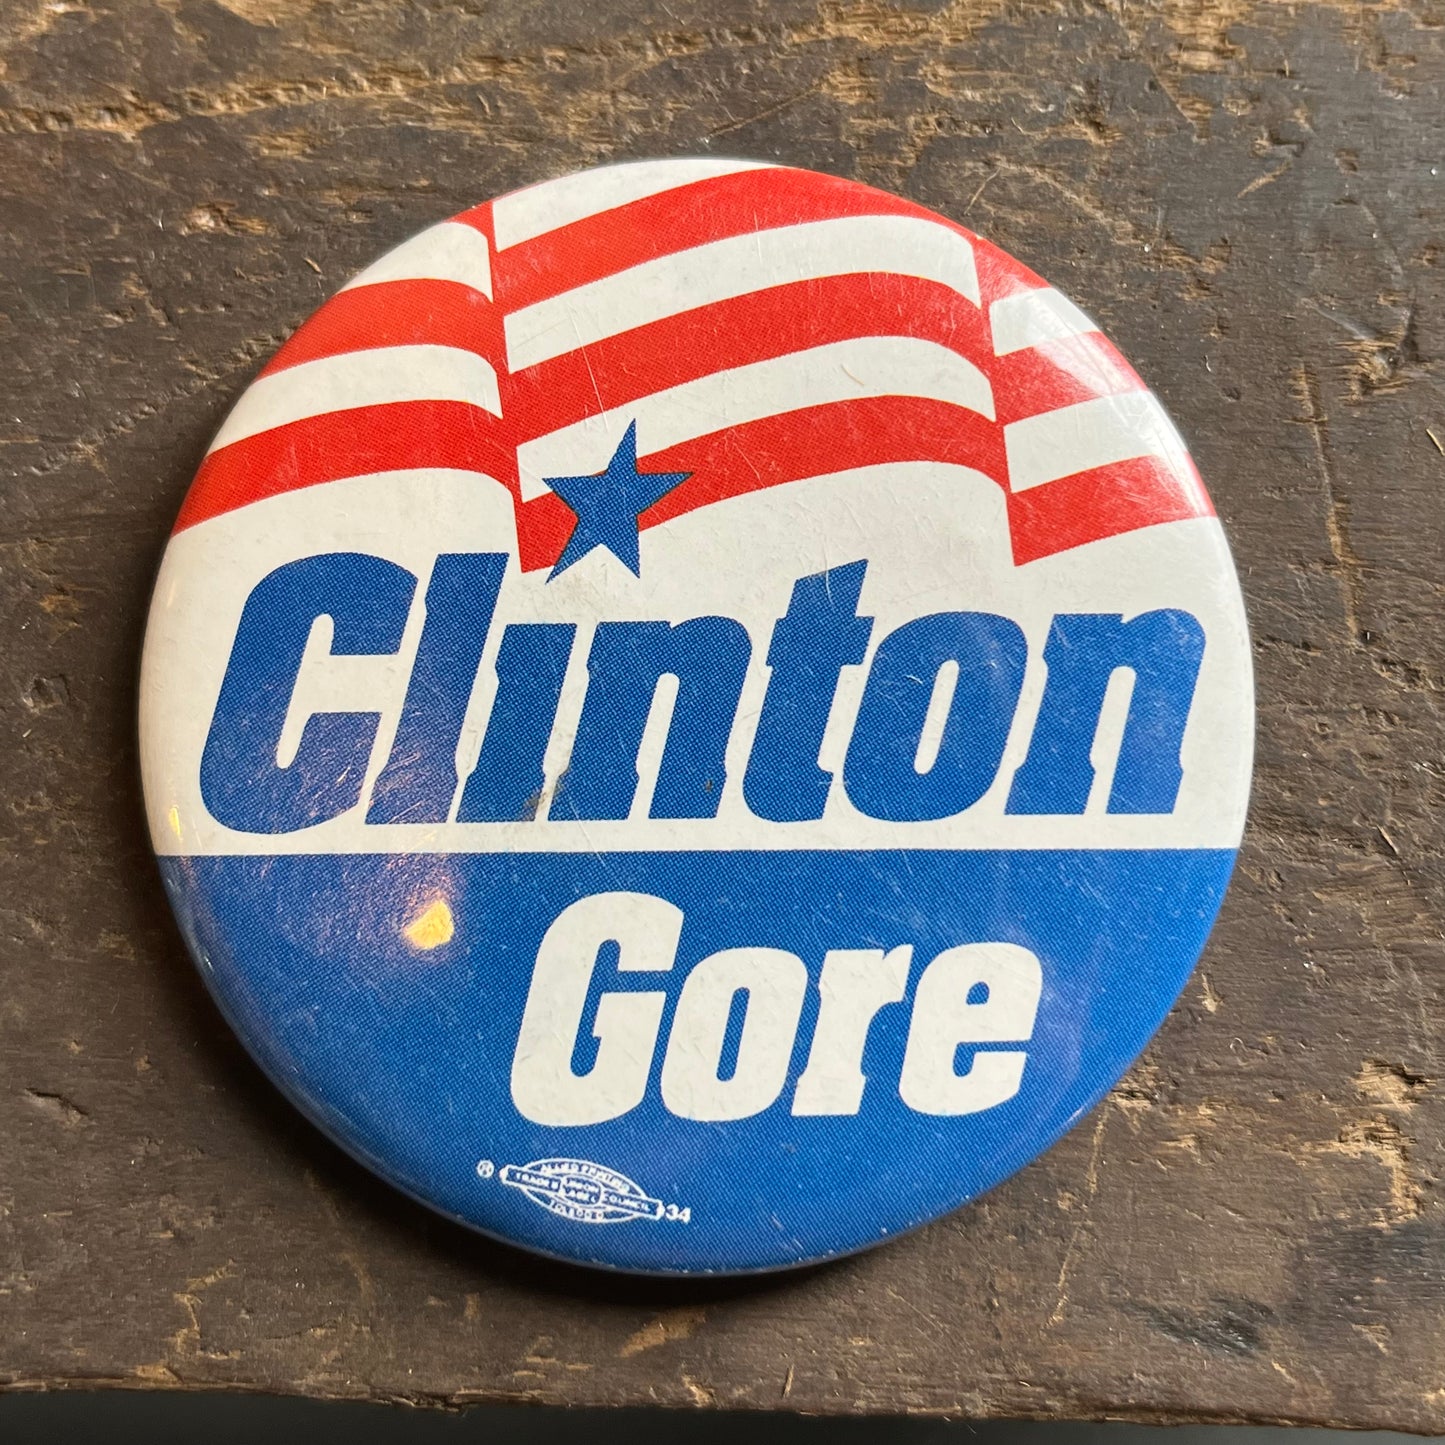 【USA vintage】Clinton / Gore 缶バッジ